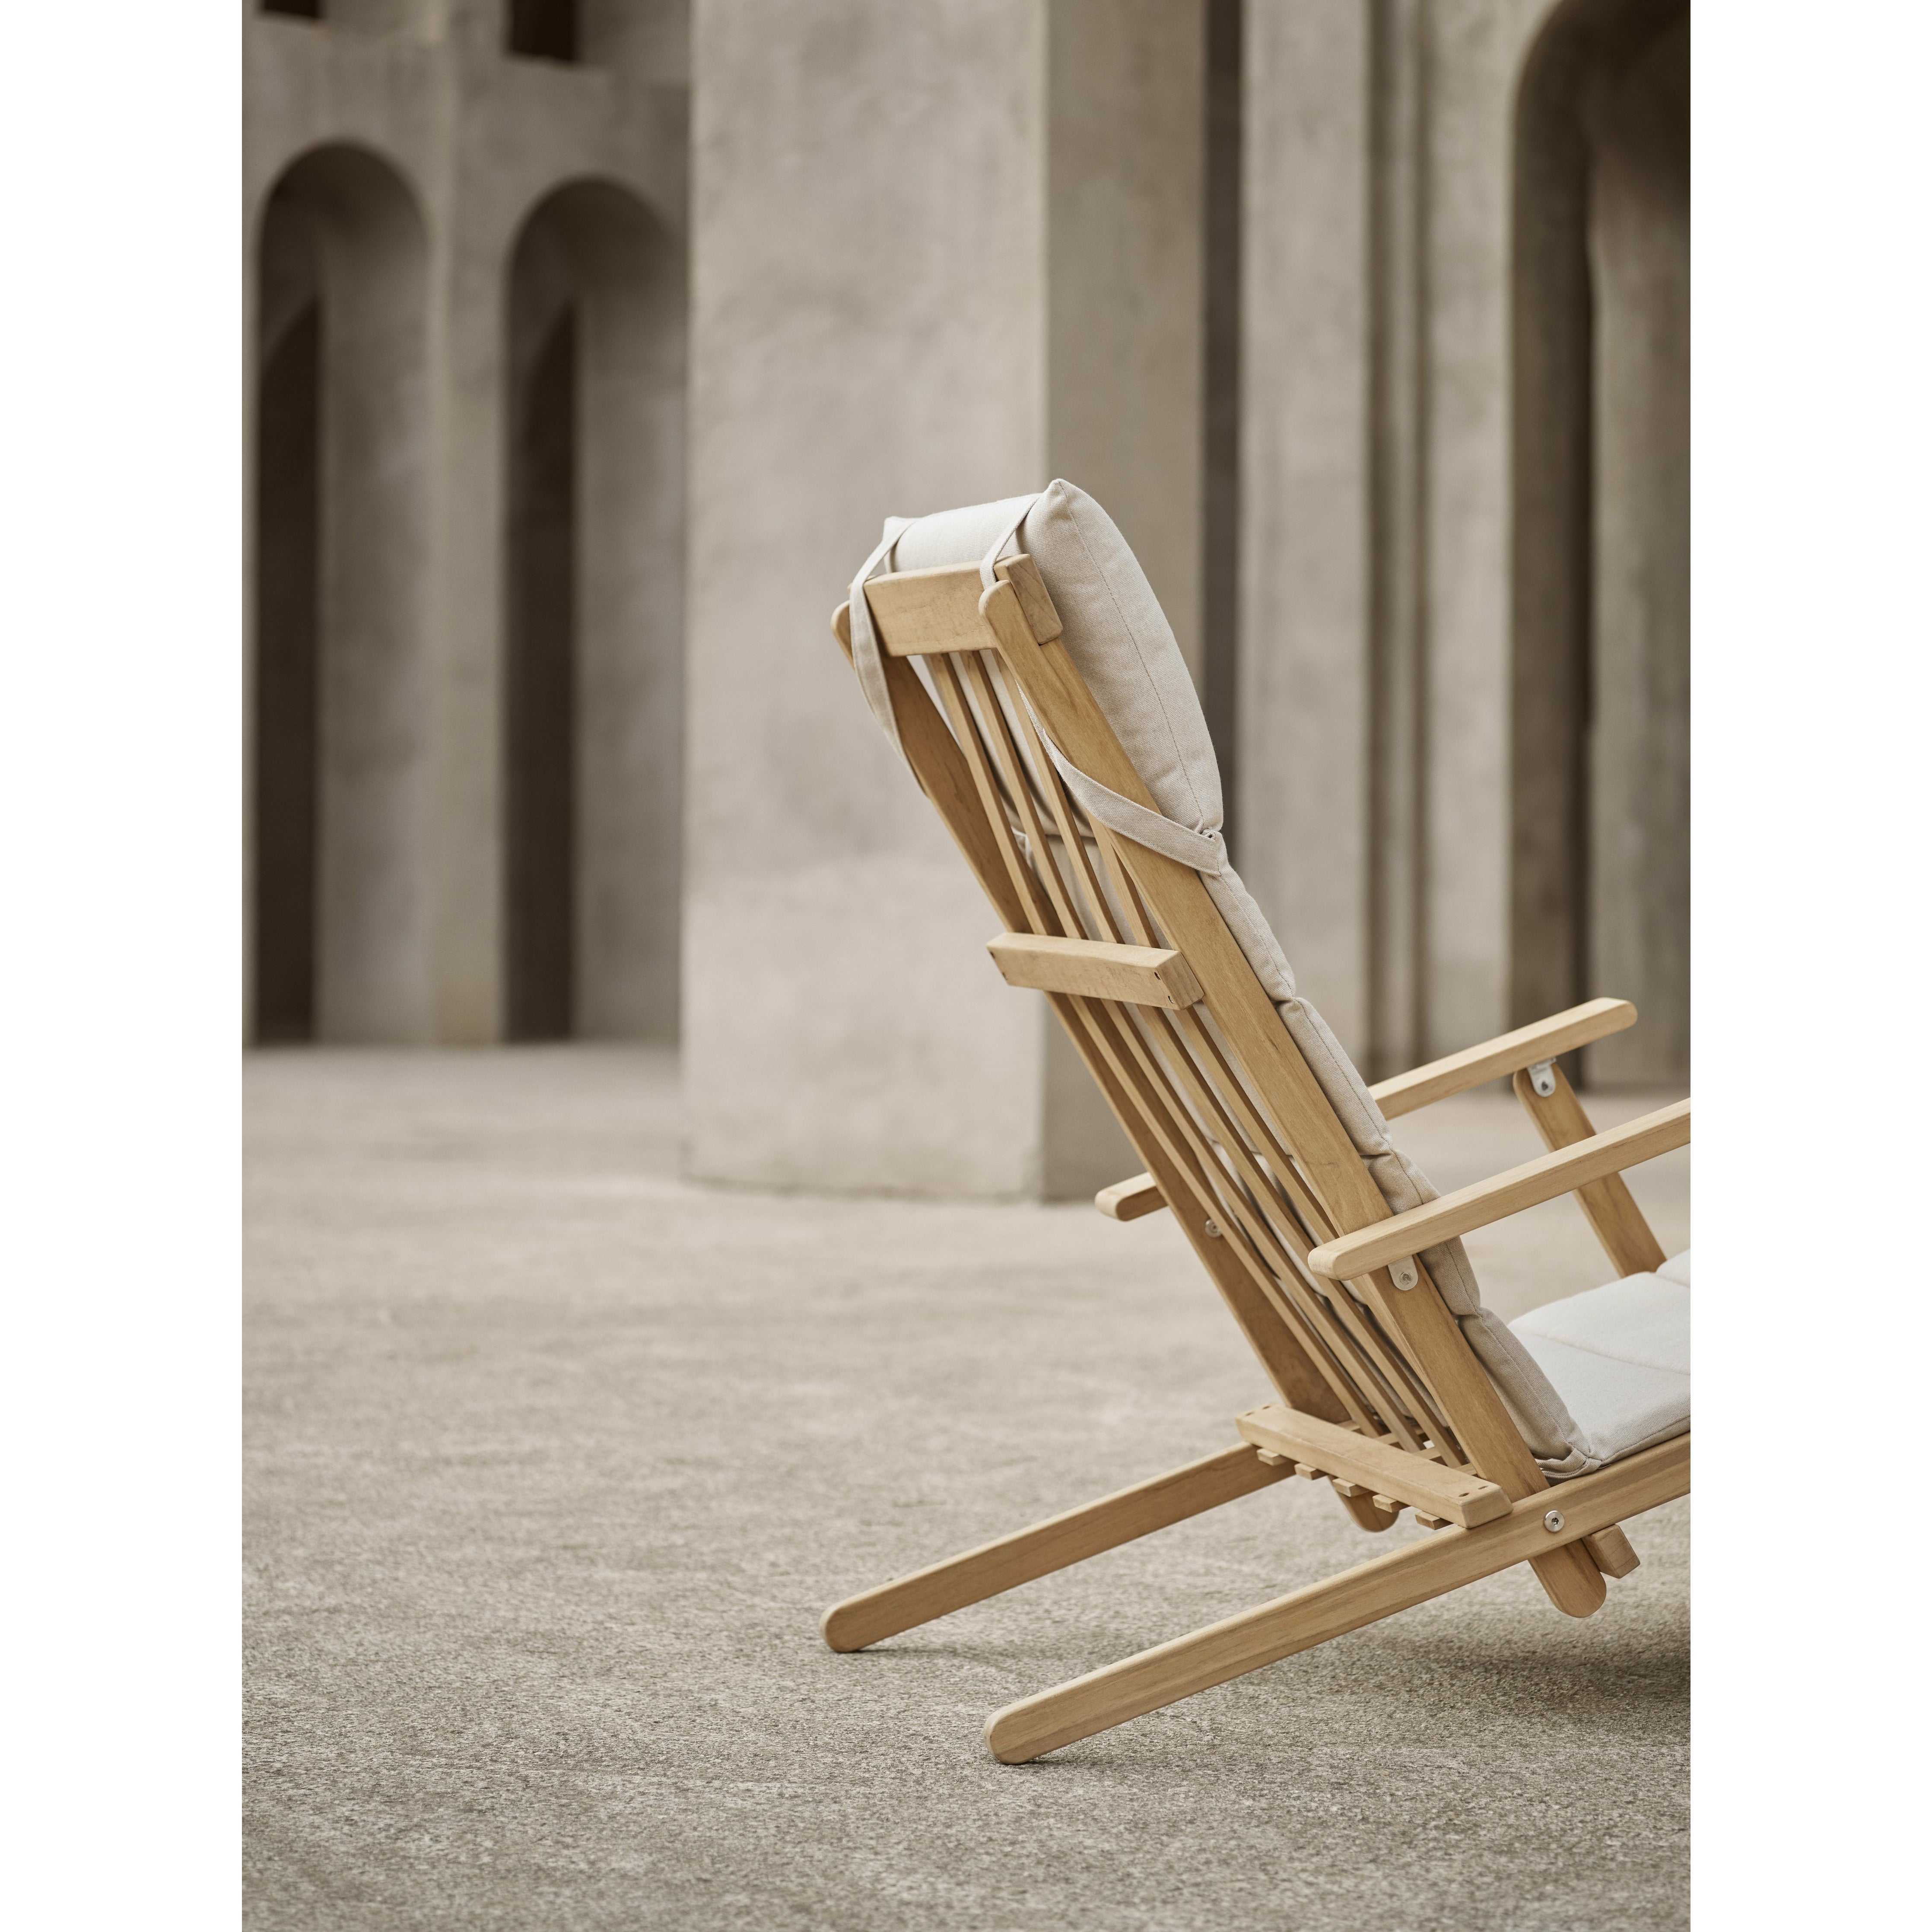 Carl Hansen Cushion pour BM5568 Deck Chair, patrimoine Papyrus